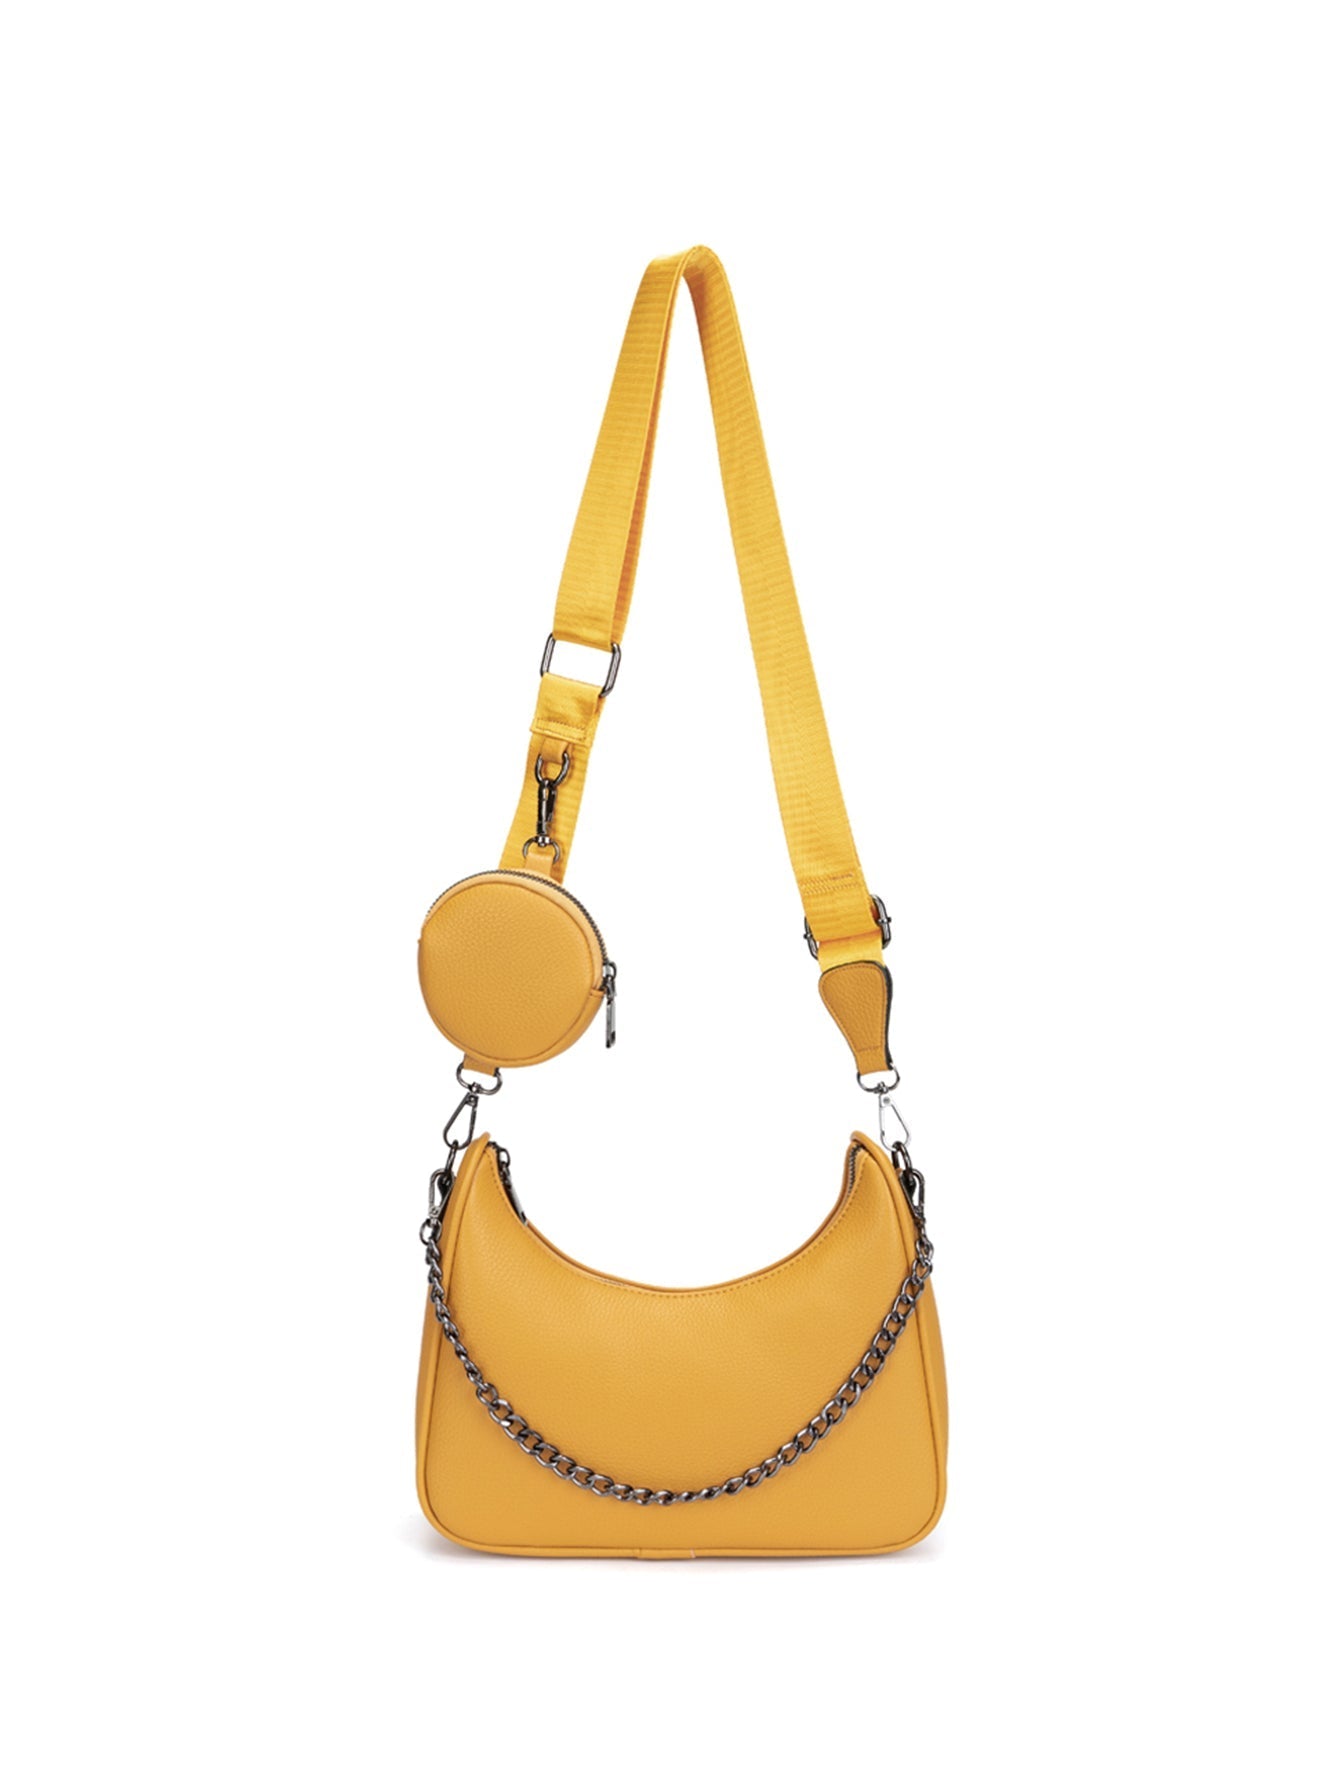 Small Crossbody Hobo Handbags for Women, Multipurpose Soft Shoulder Bag Lightweight Retro Tote Bag with Coin Purse 2pcs/set Sai Feel